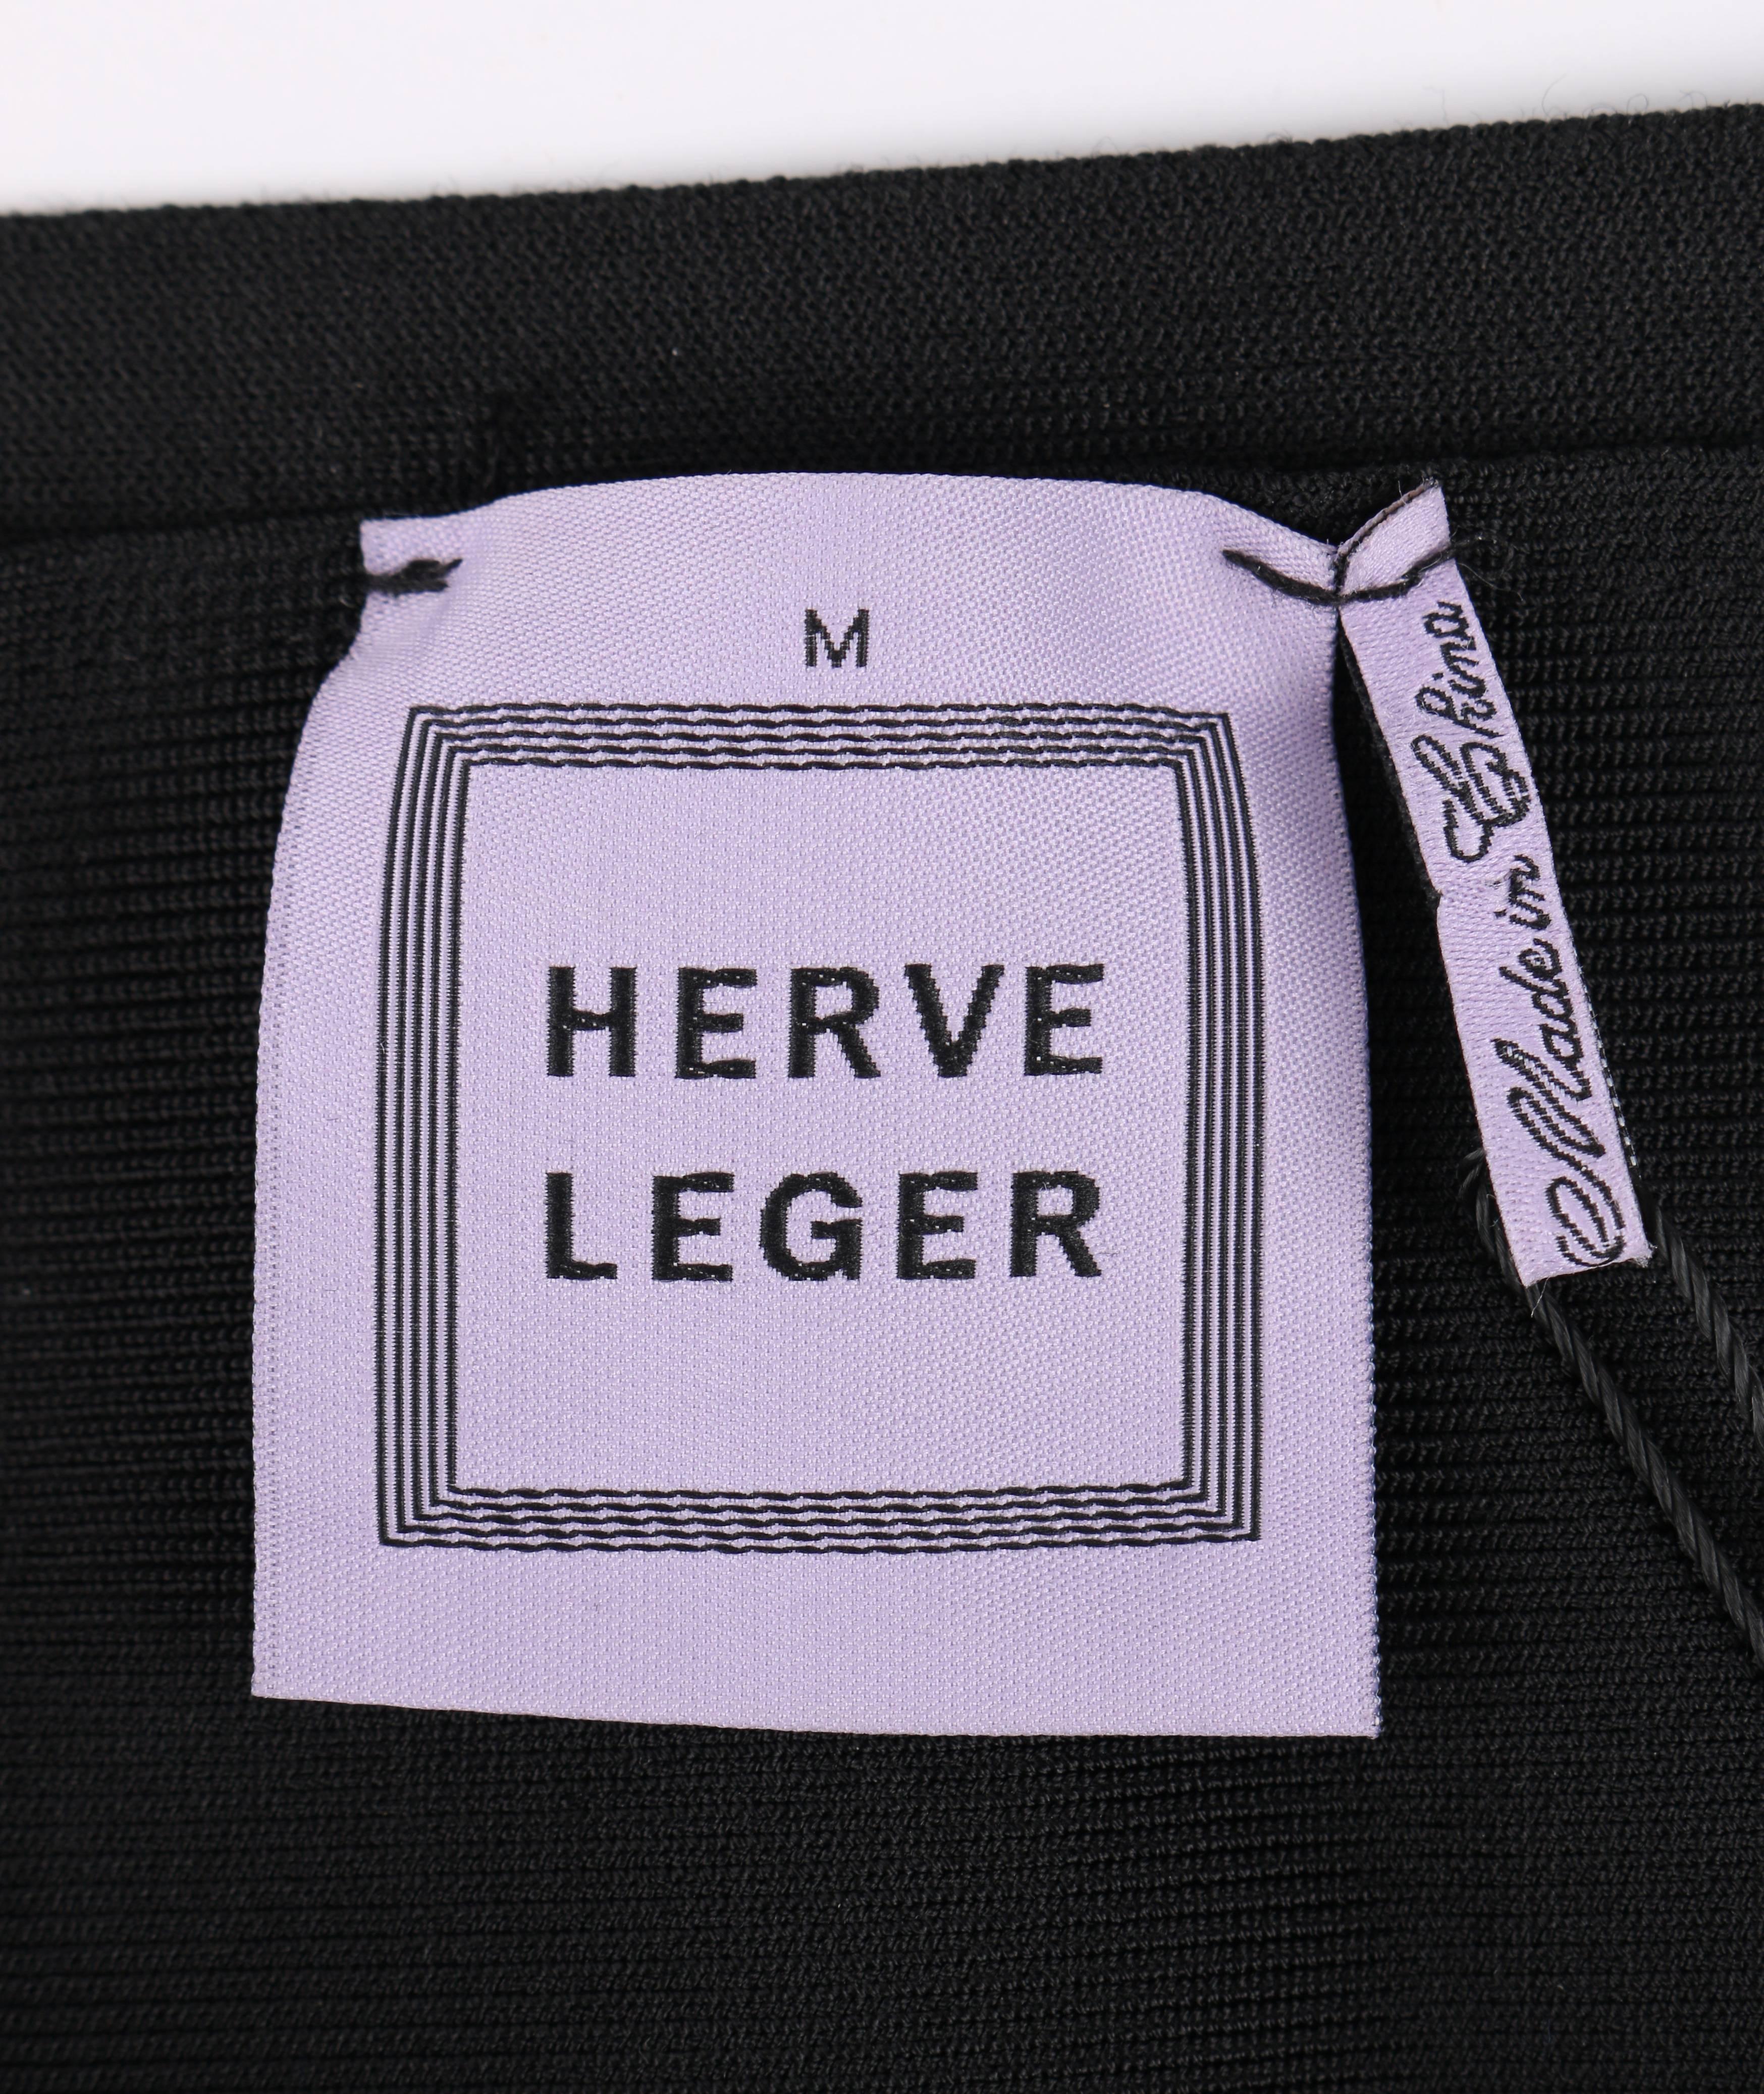 HERVE LEGER S/S 2009 